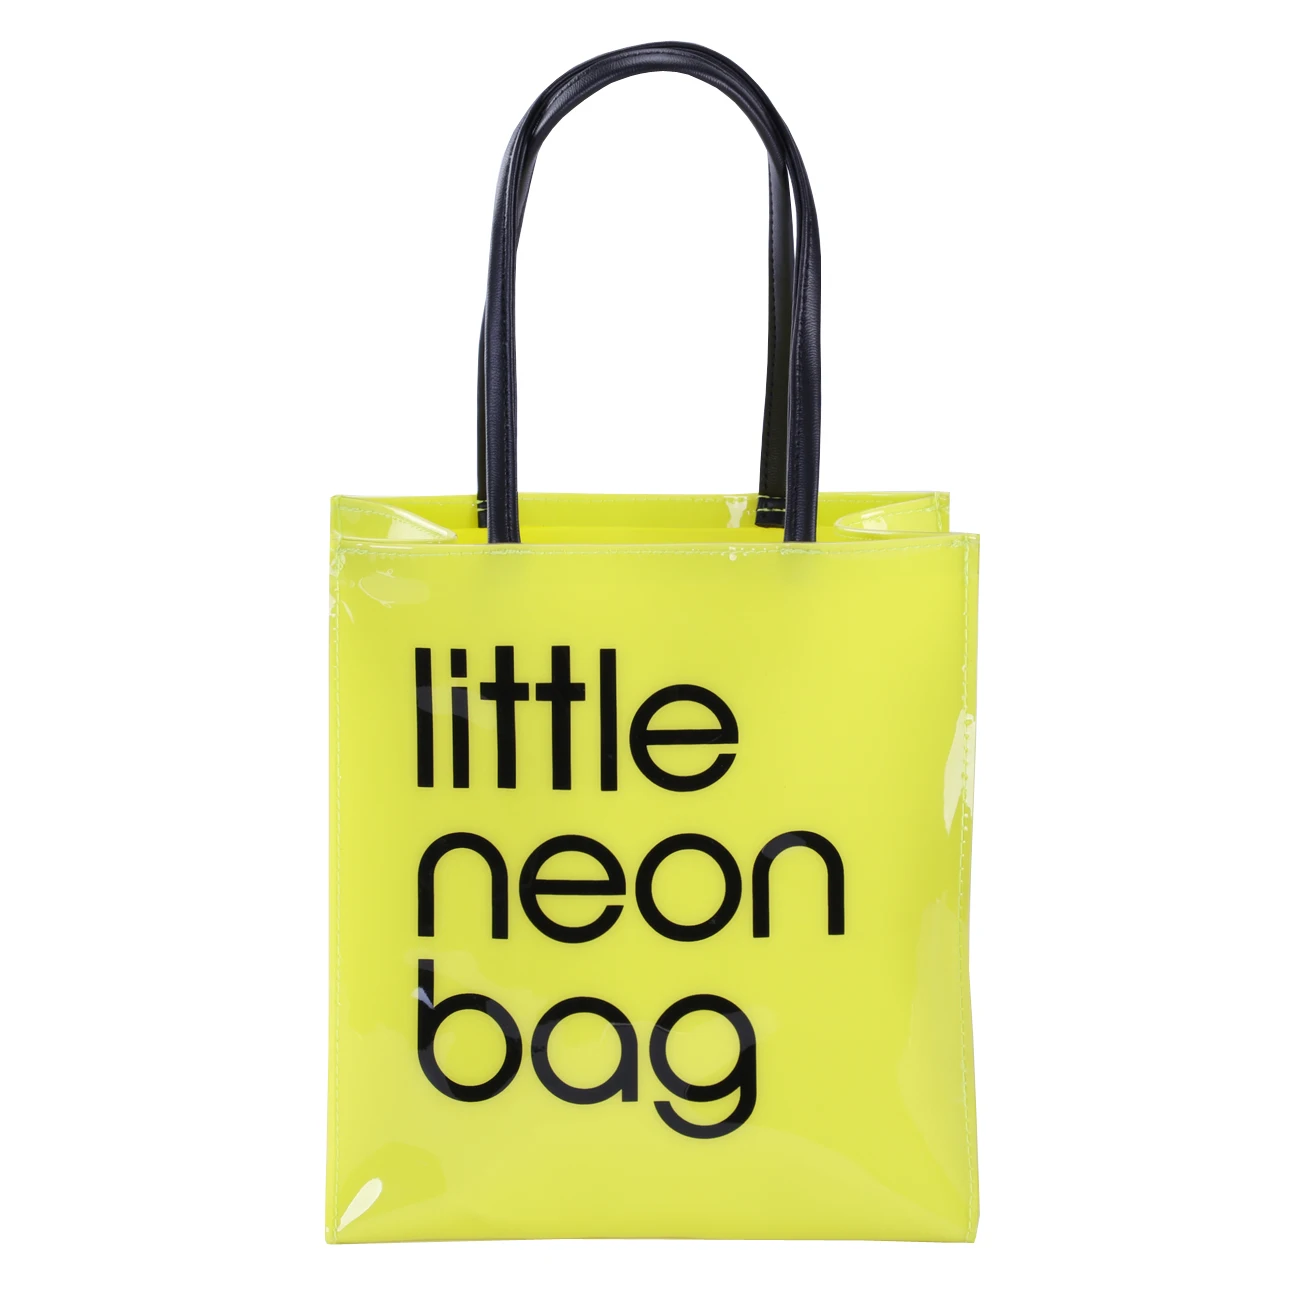 

new product little neon bag pvc green bags handbags low MOQ